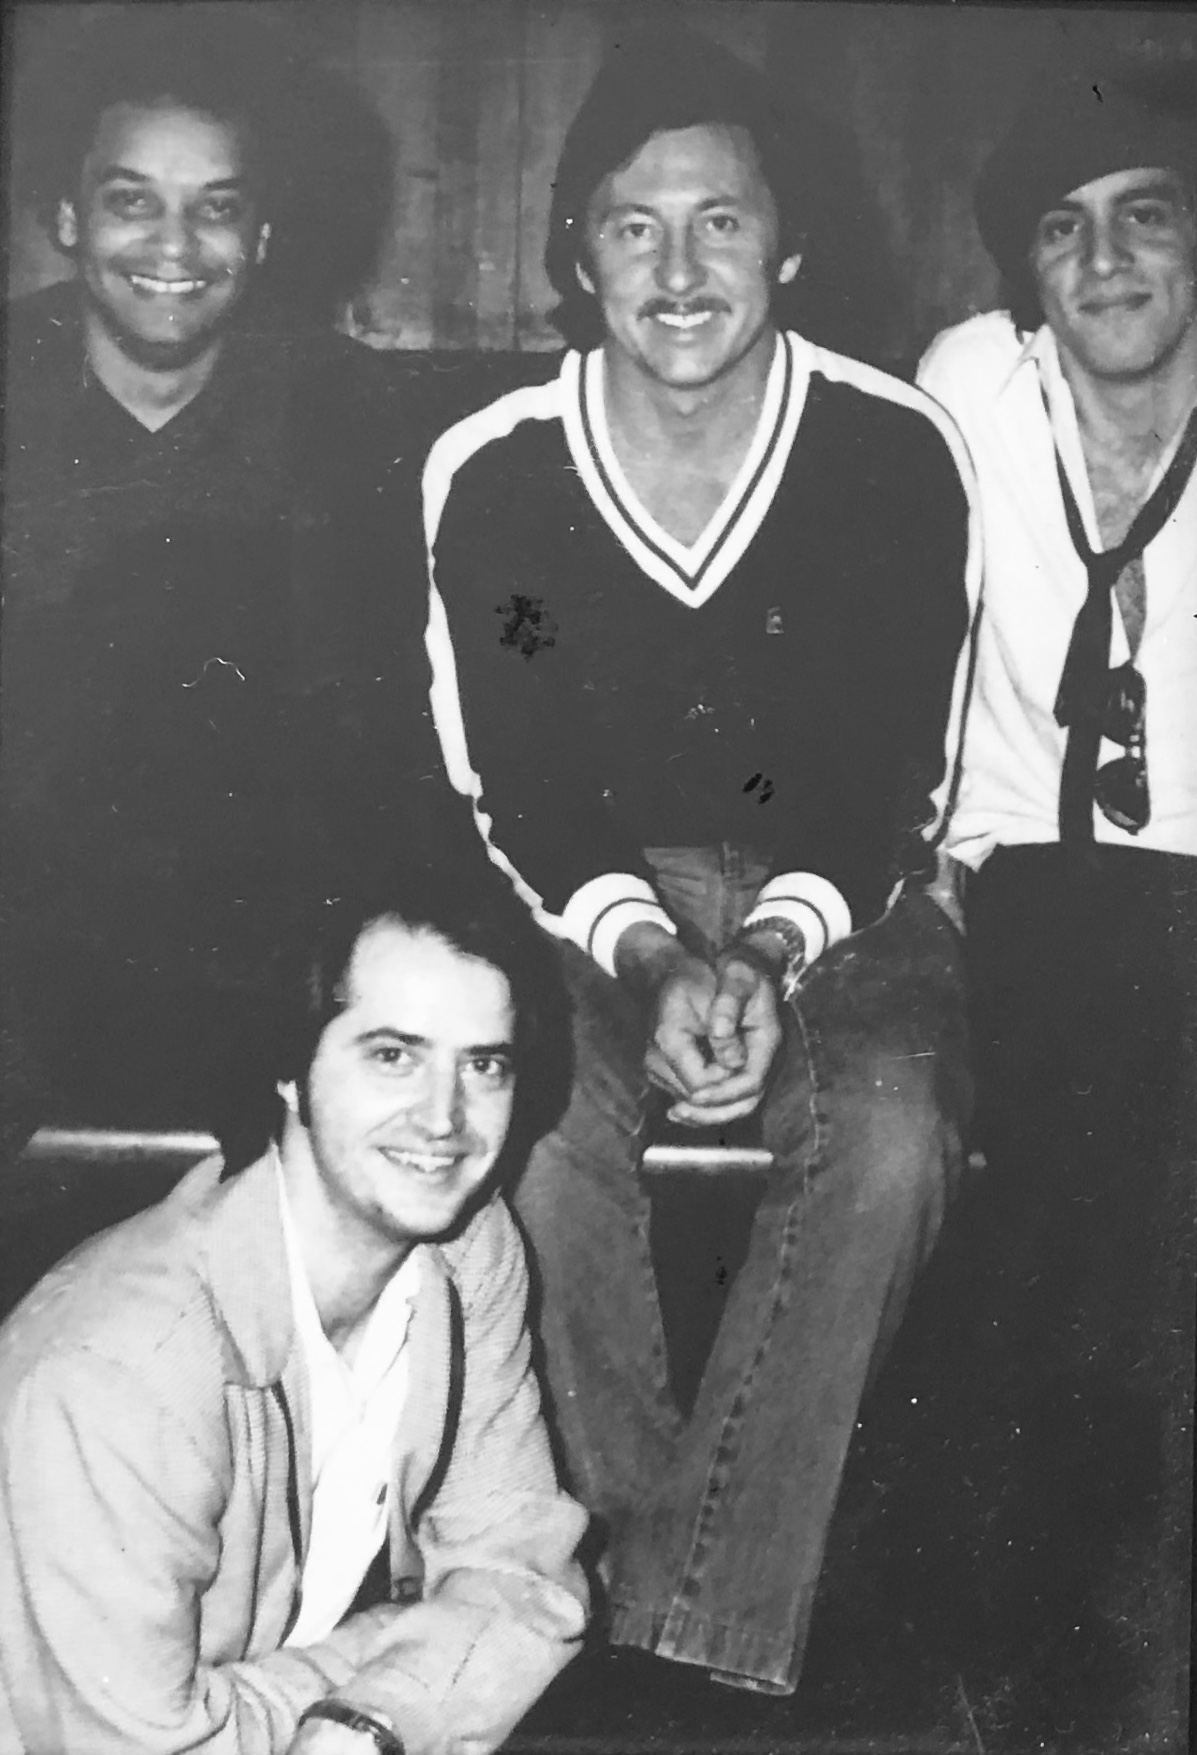  Gary US Bonds, Gary Klein, and Lil Steven, 1982 